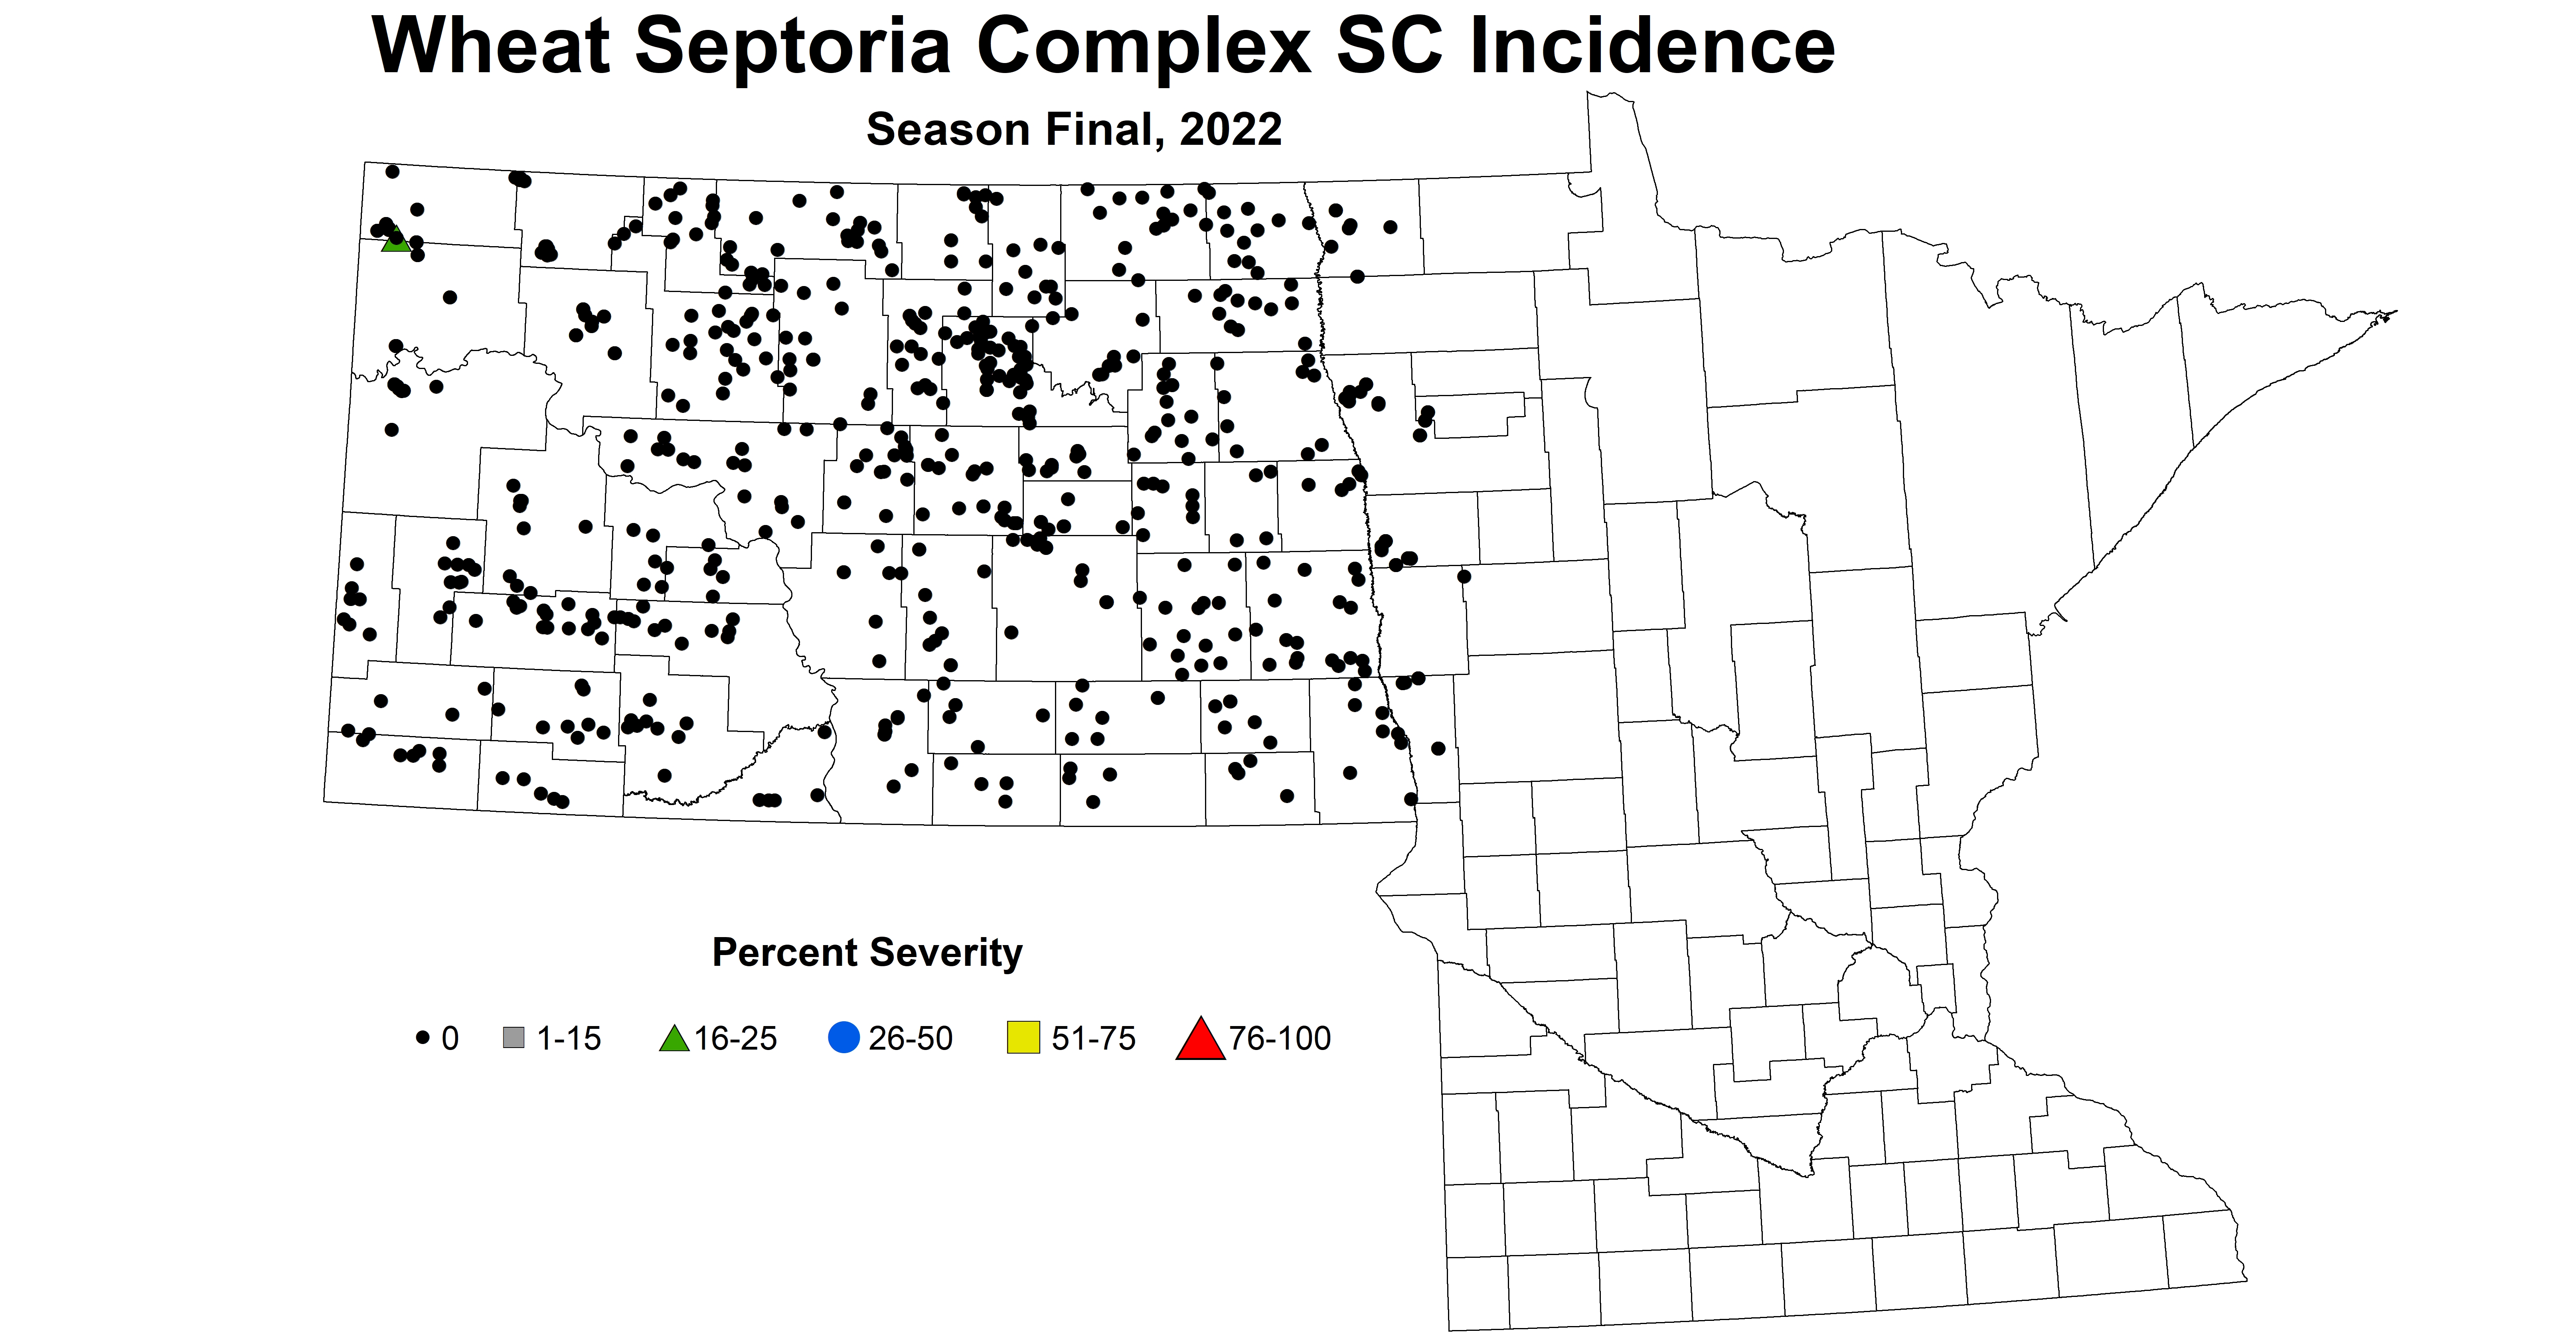 wheat septoria complex SC incidence 2022 season final